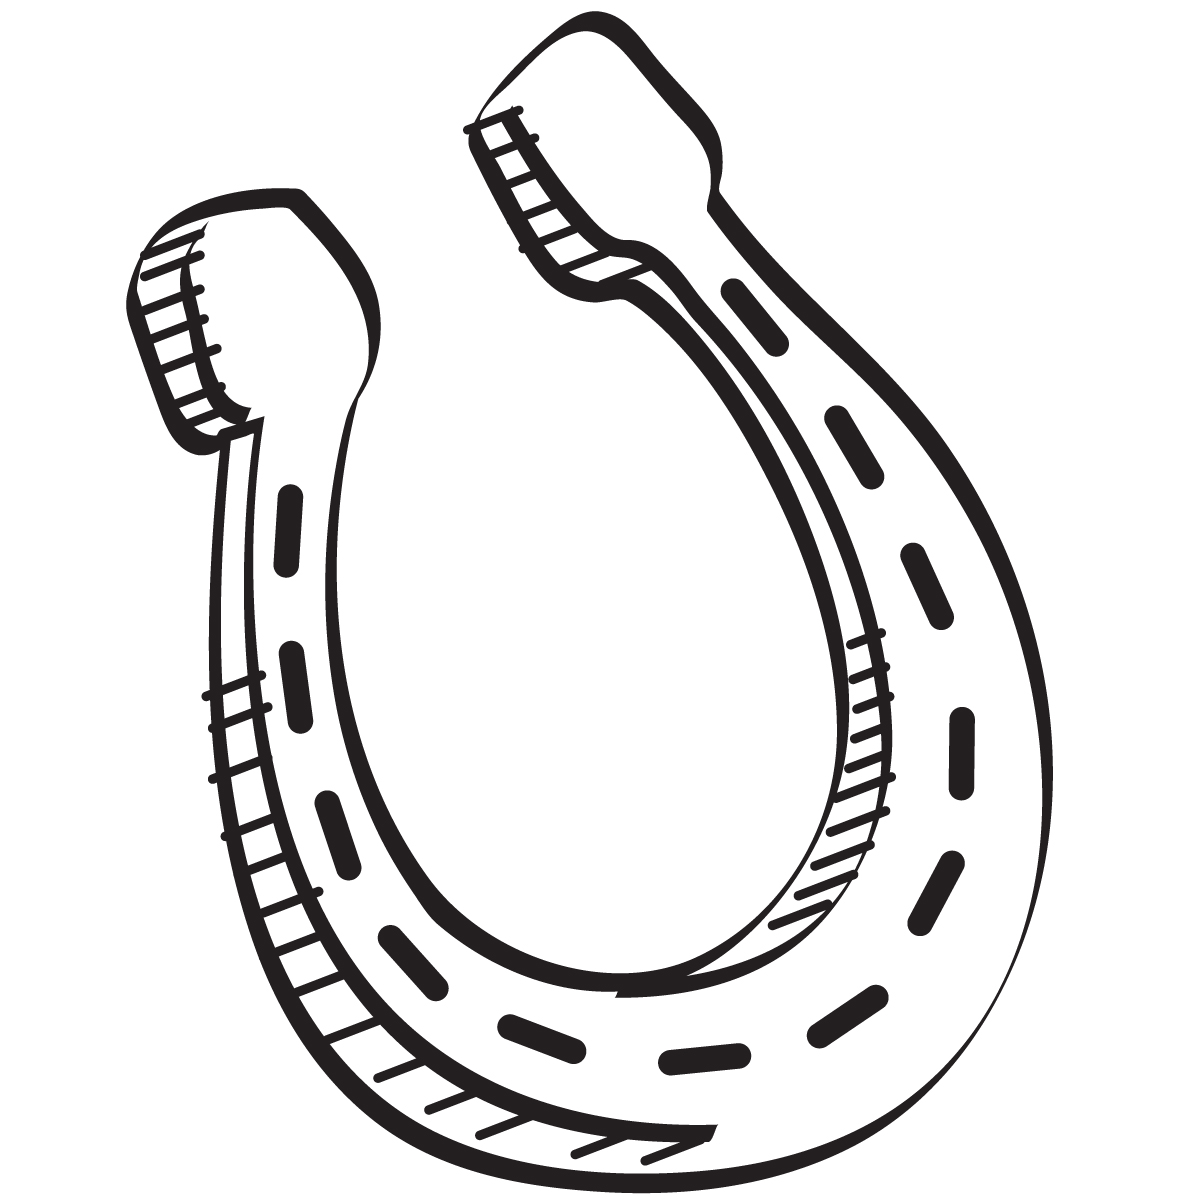 Horse shoe horseshoe clipart free download clip art on